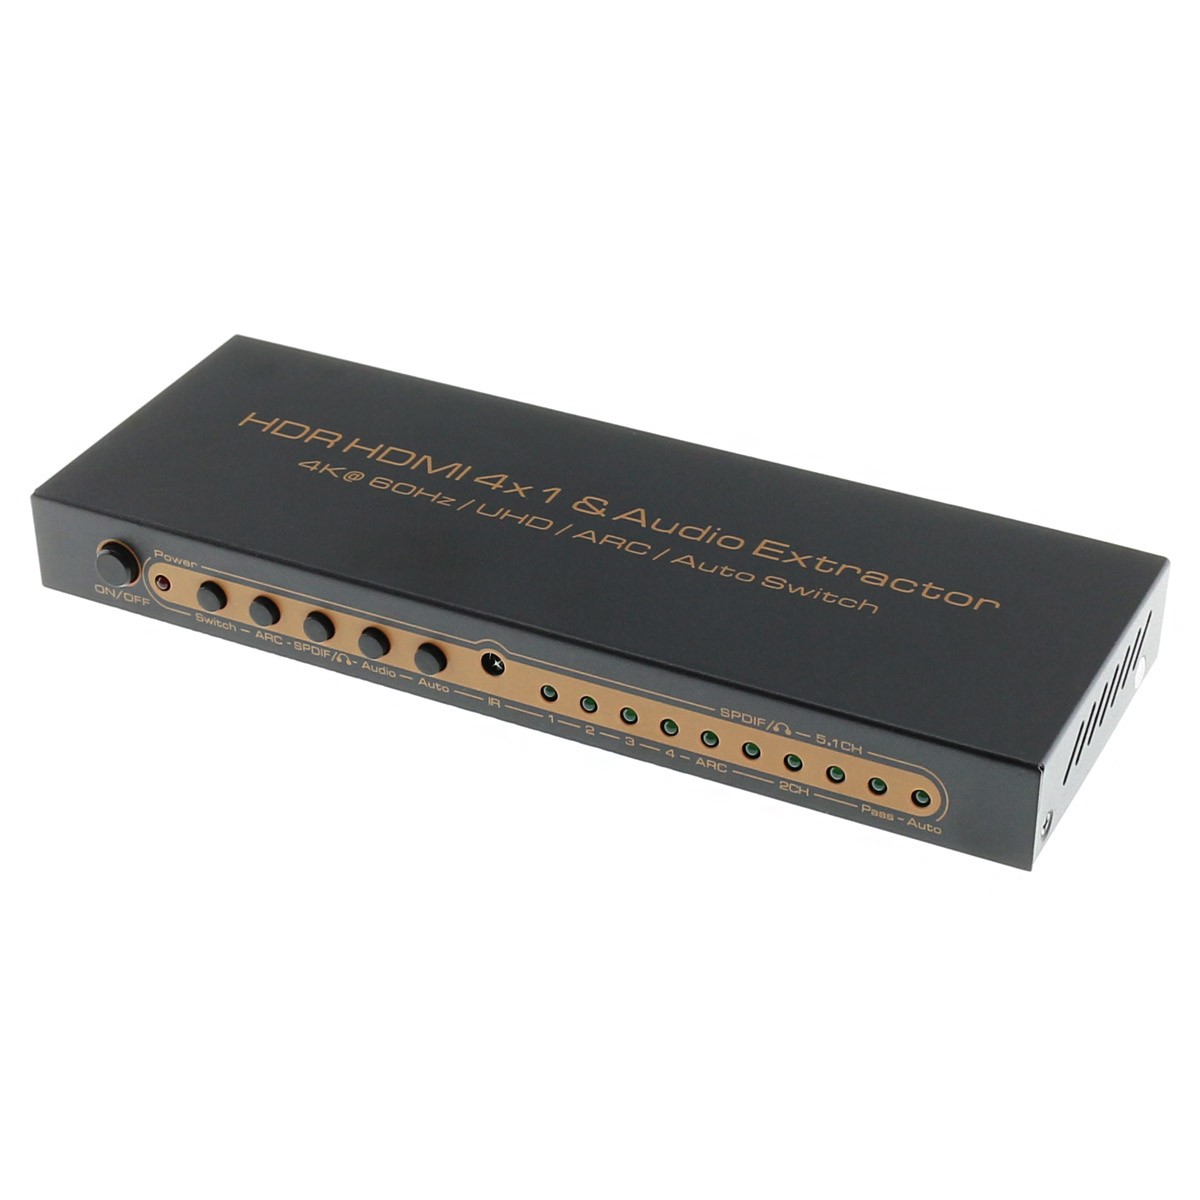 Hals fordelagtige Prestige Audio Extractor HDMI 5.1 to HDMI / Optical / Jack HDCP2.2 HDR 4K 60Hz ARC -  Audiophonics